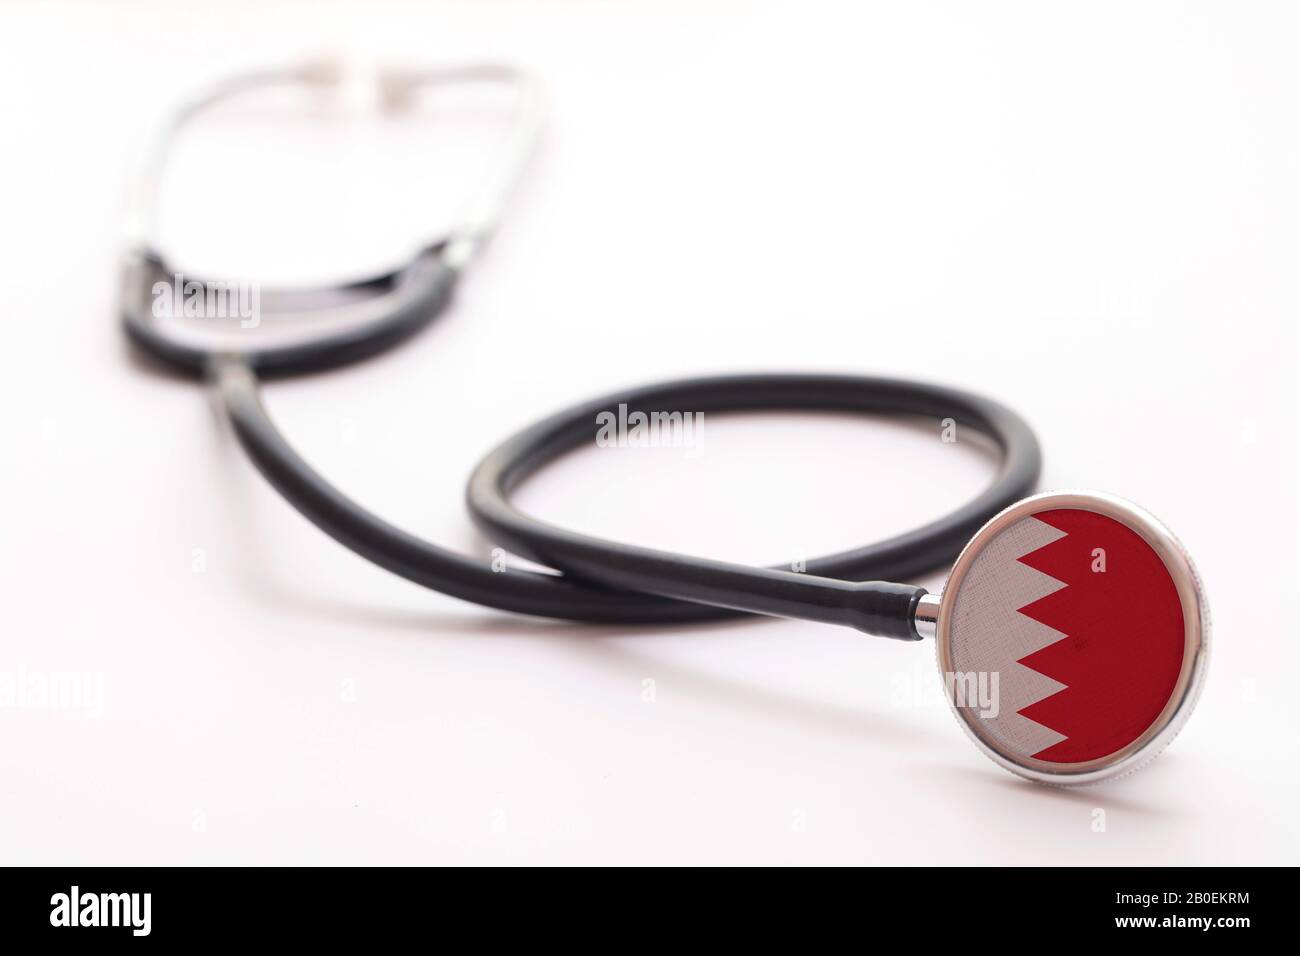 Concetto sanitario del Bahrain. Stetoscopio medico con bandiera del paese Foto Stock